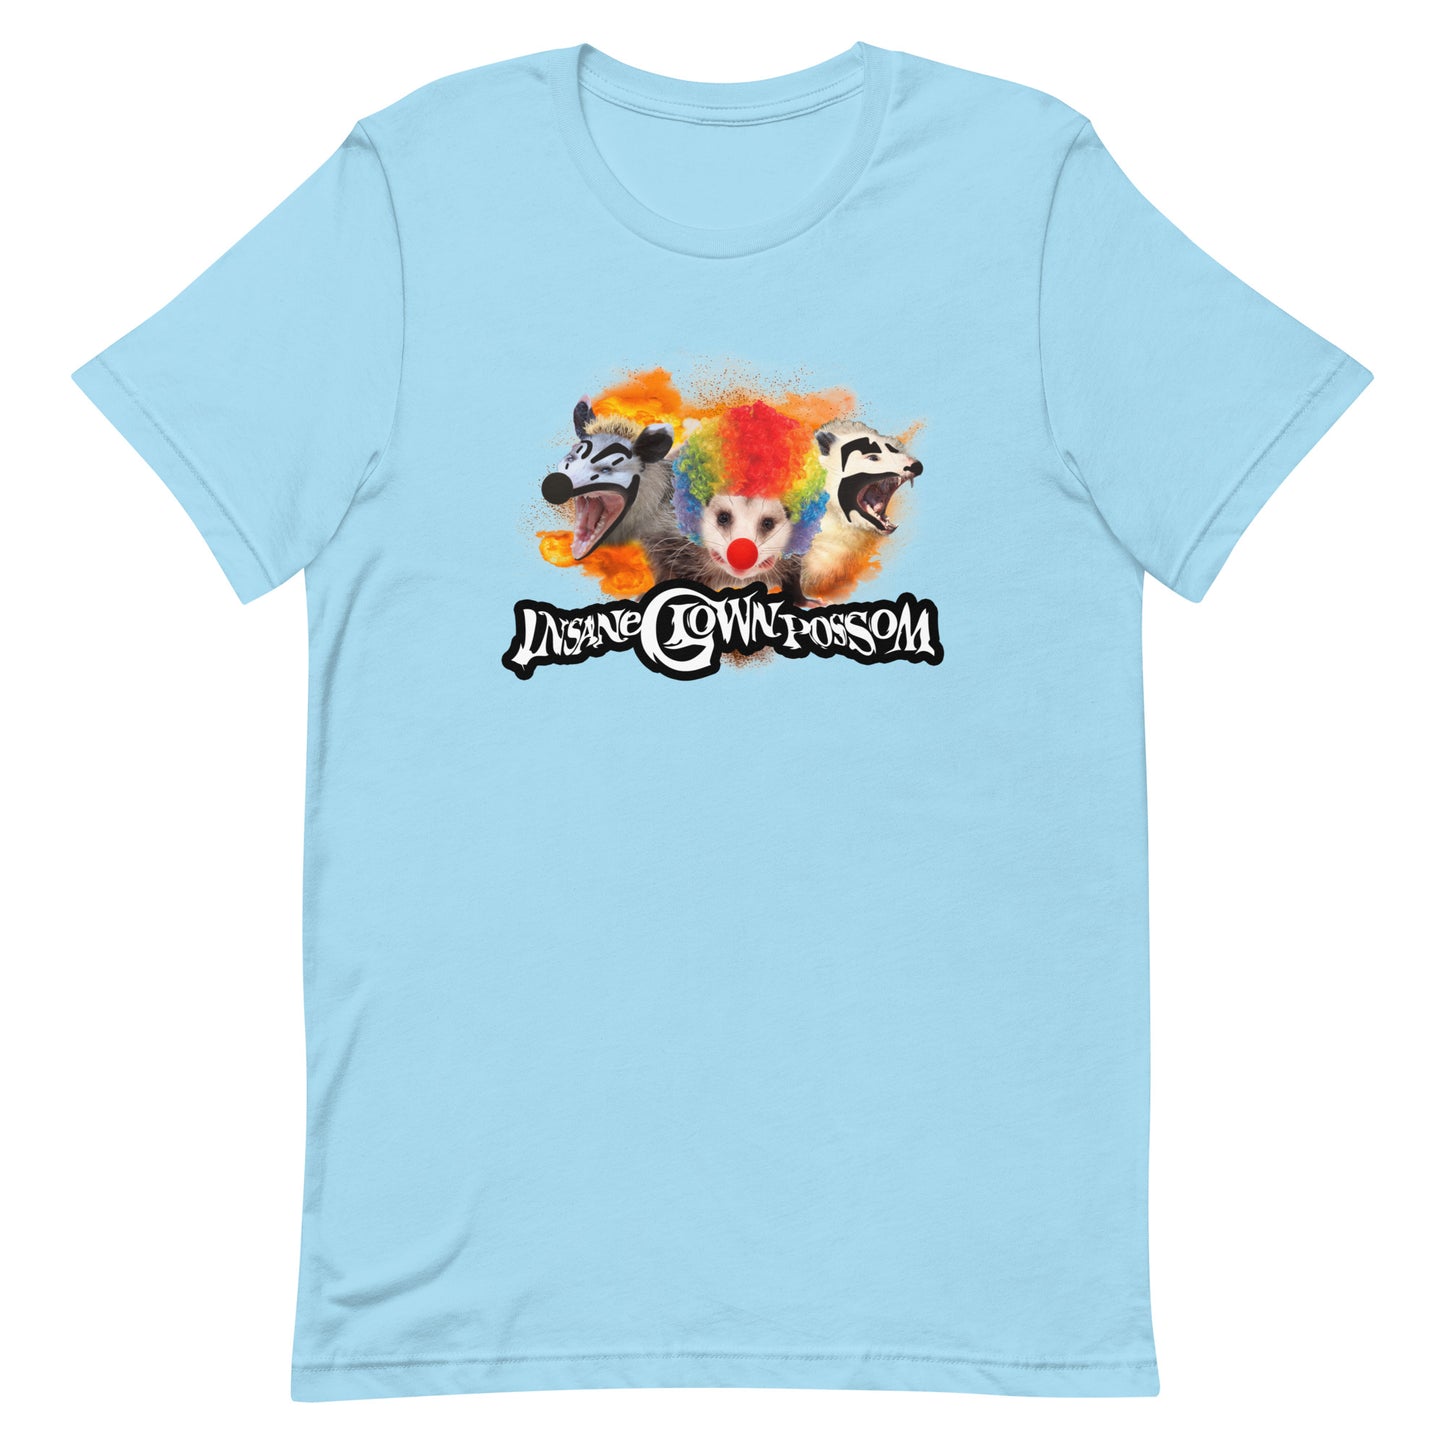 Insane Clown Possum Unisex t-shirt